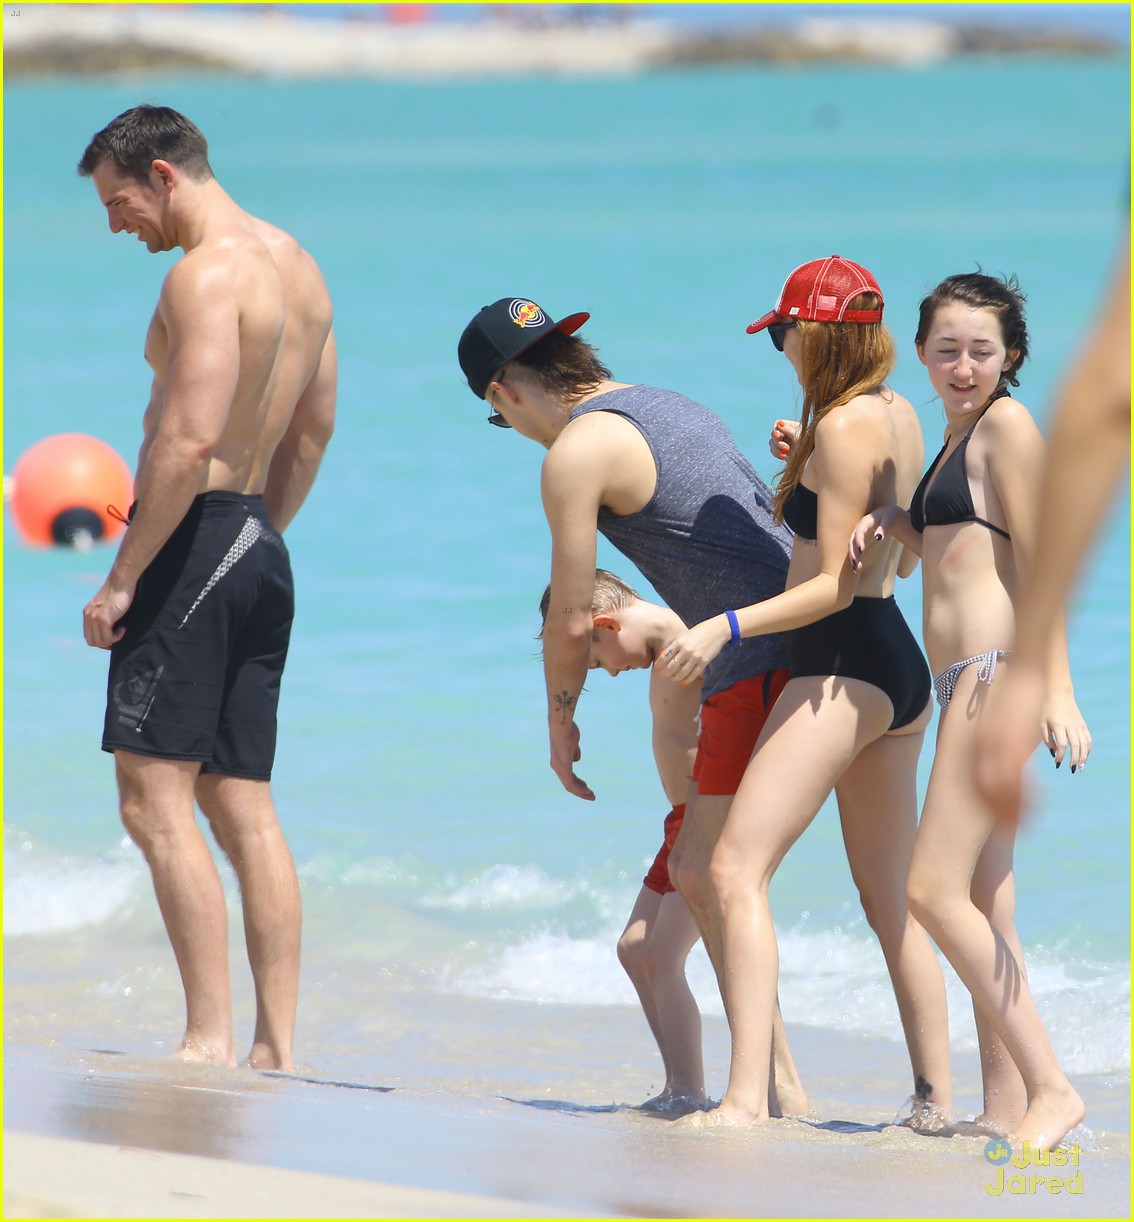 Noah Cyrus Rocks a Bikini in Miami! noah cyrus bikini miami beach 08 - Phot...